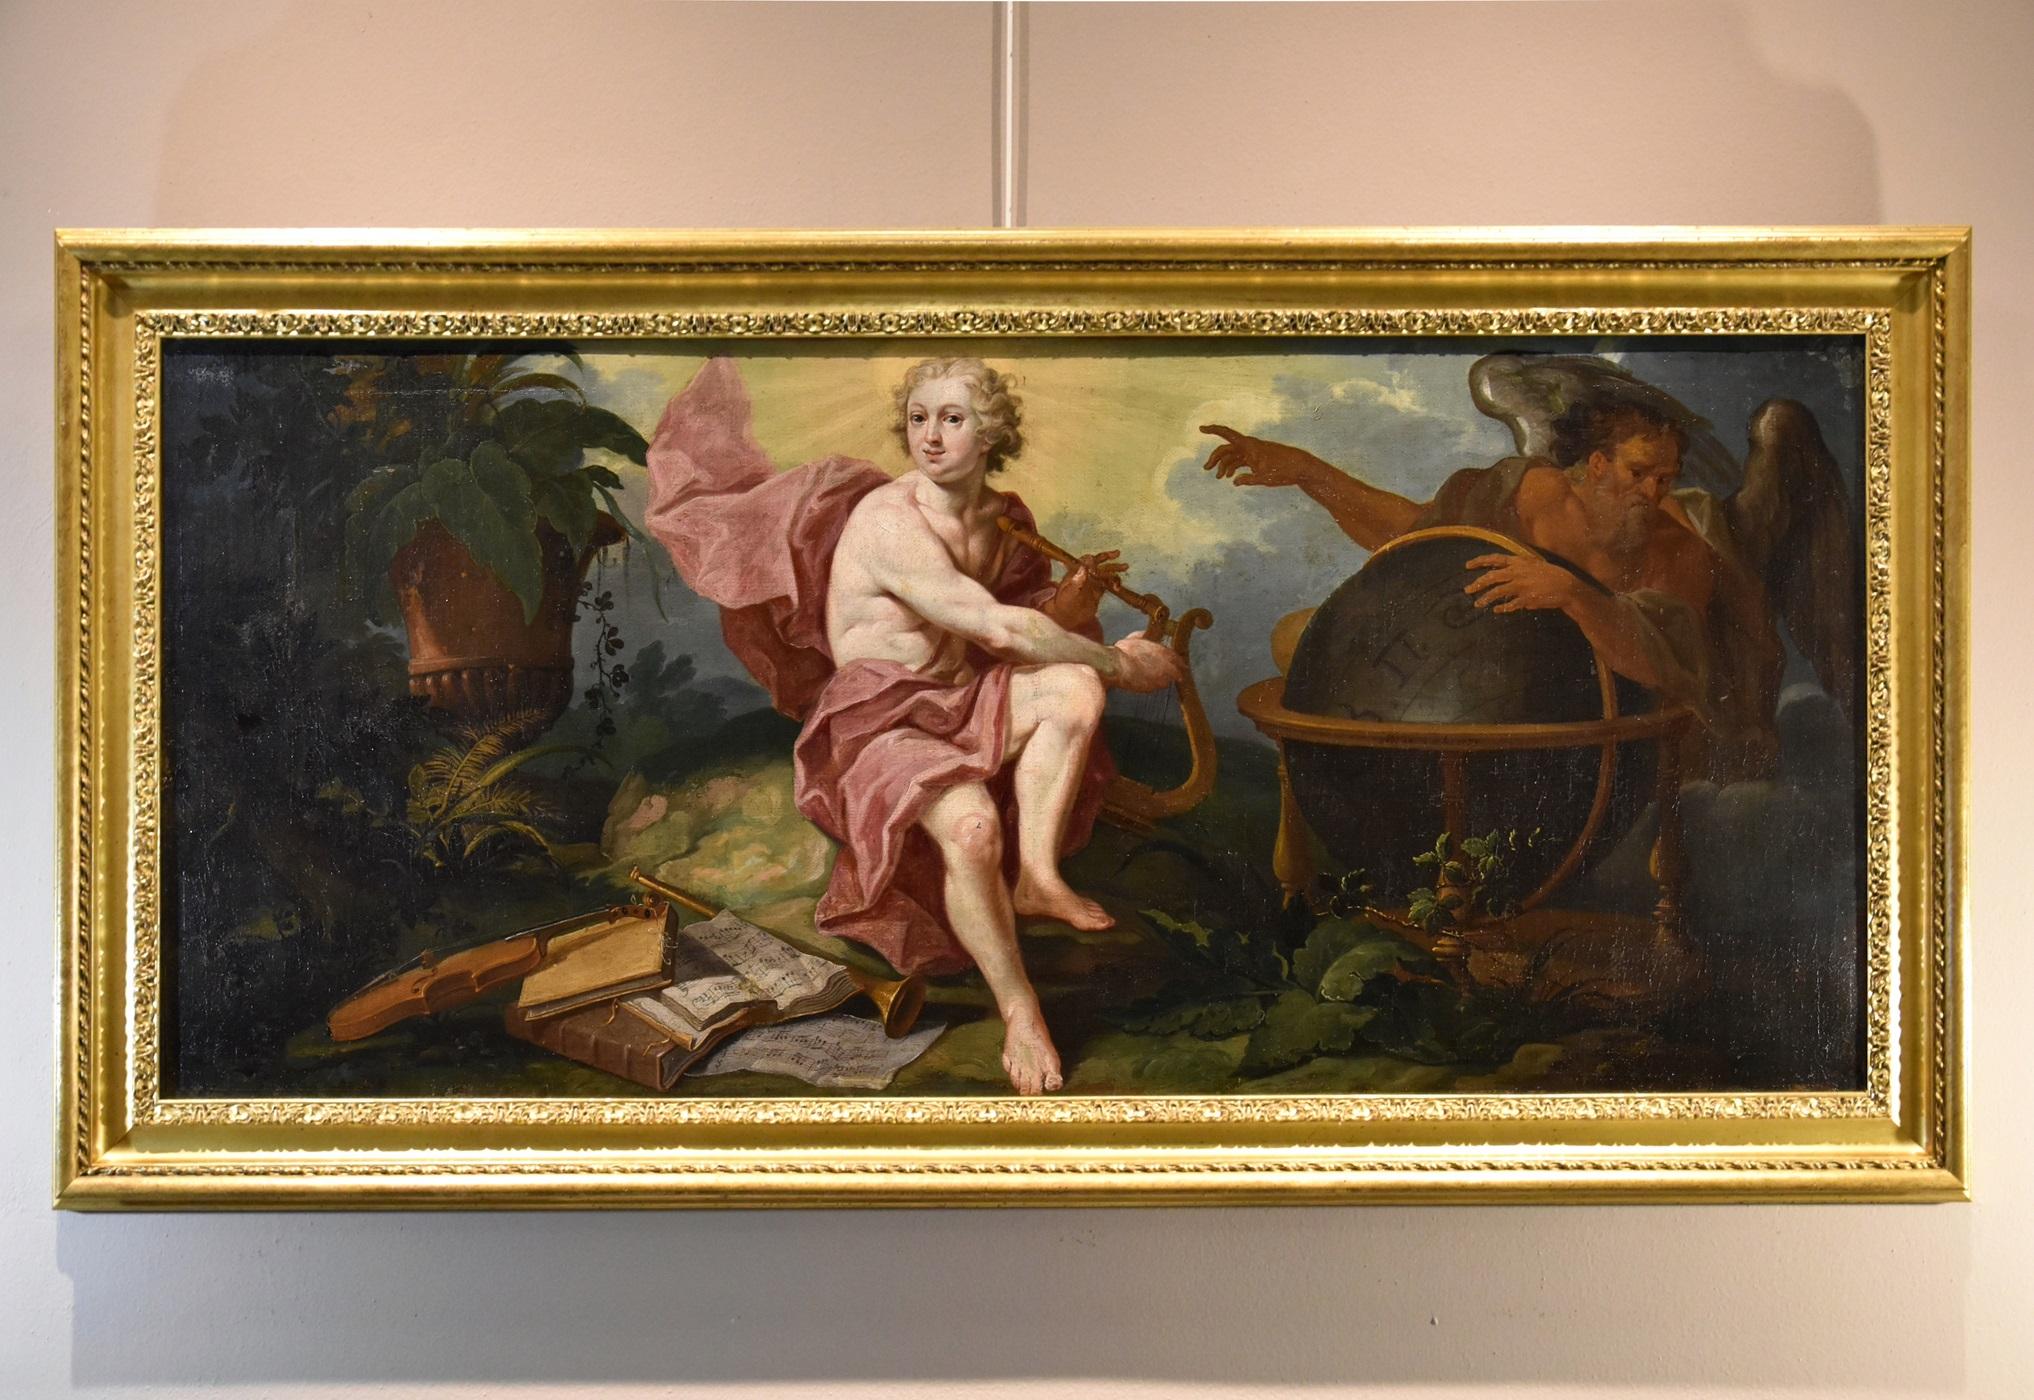 Allegory Triumph Of Art Over Time De Visch Paint 18th Century Oil on canvas Art  - Old Masters Painting by Matthias De Visch (1701 - 1765) 